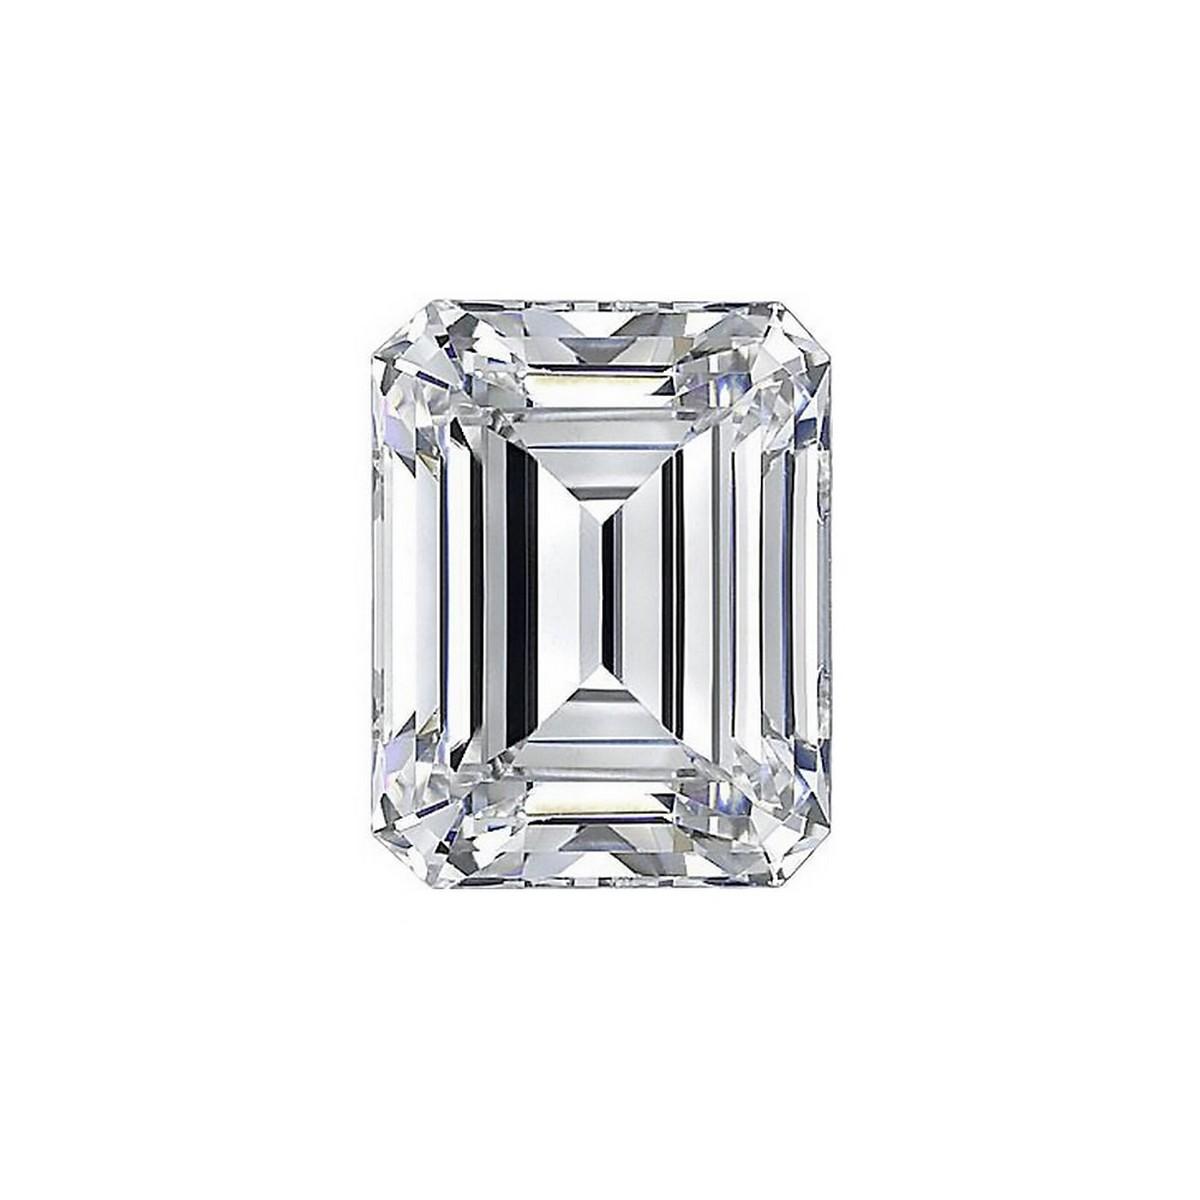 1.46 ctw. VS2 IGI Certified Emerald Cut Loose Diamond (LAB GROWN)